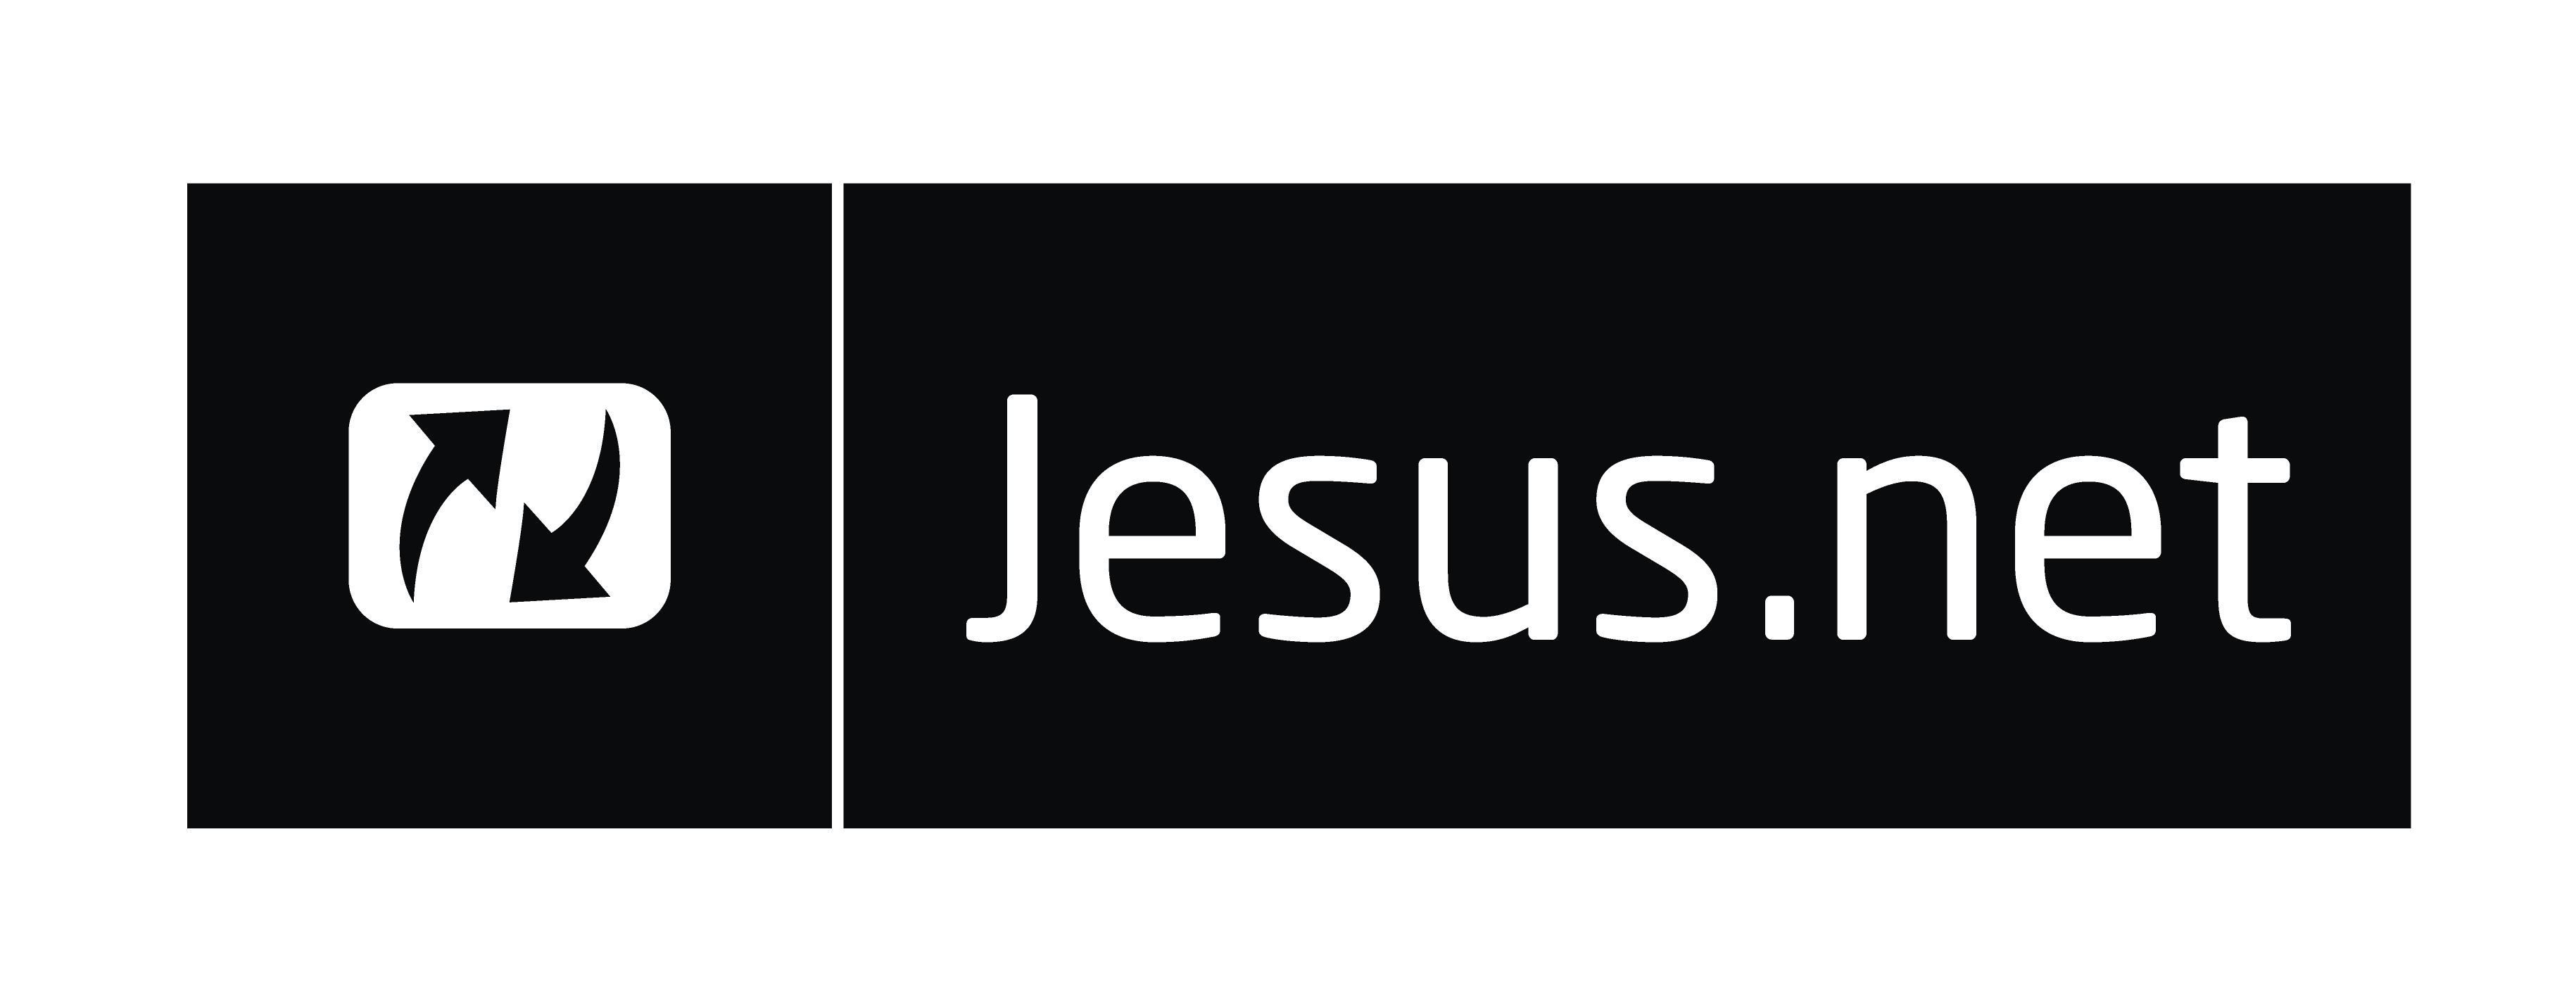 Jesus.net Foundation logo